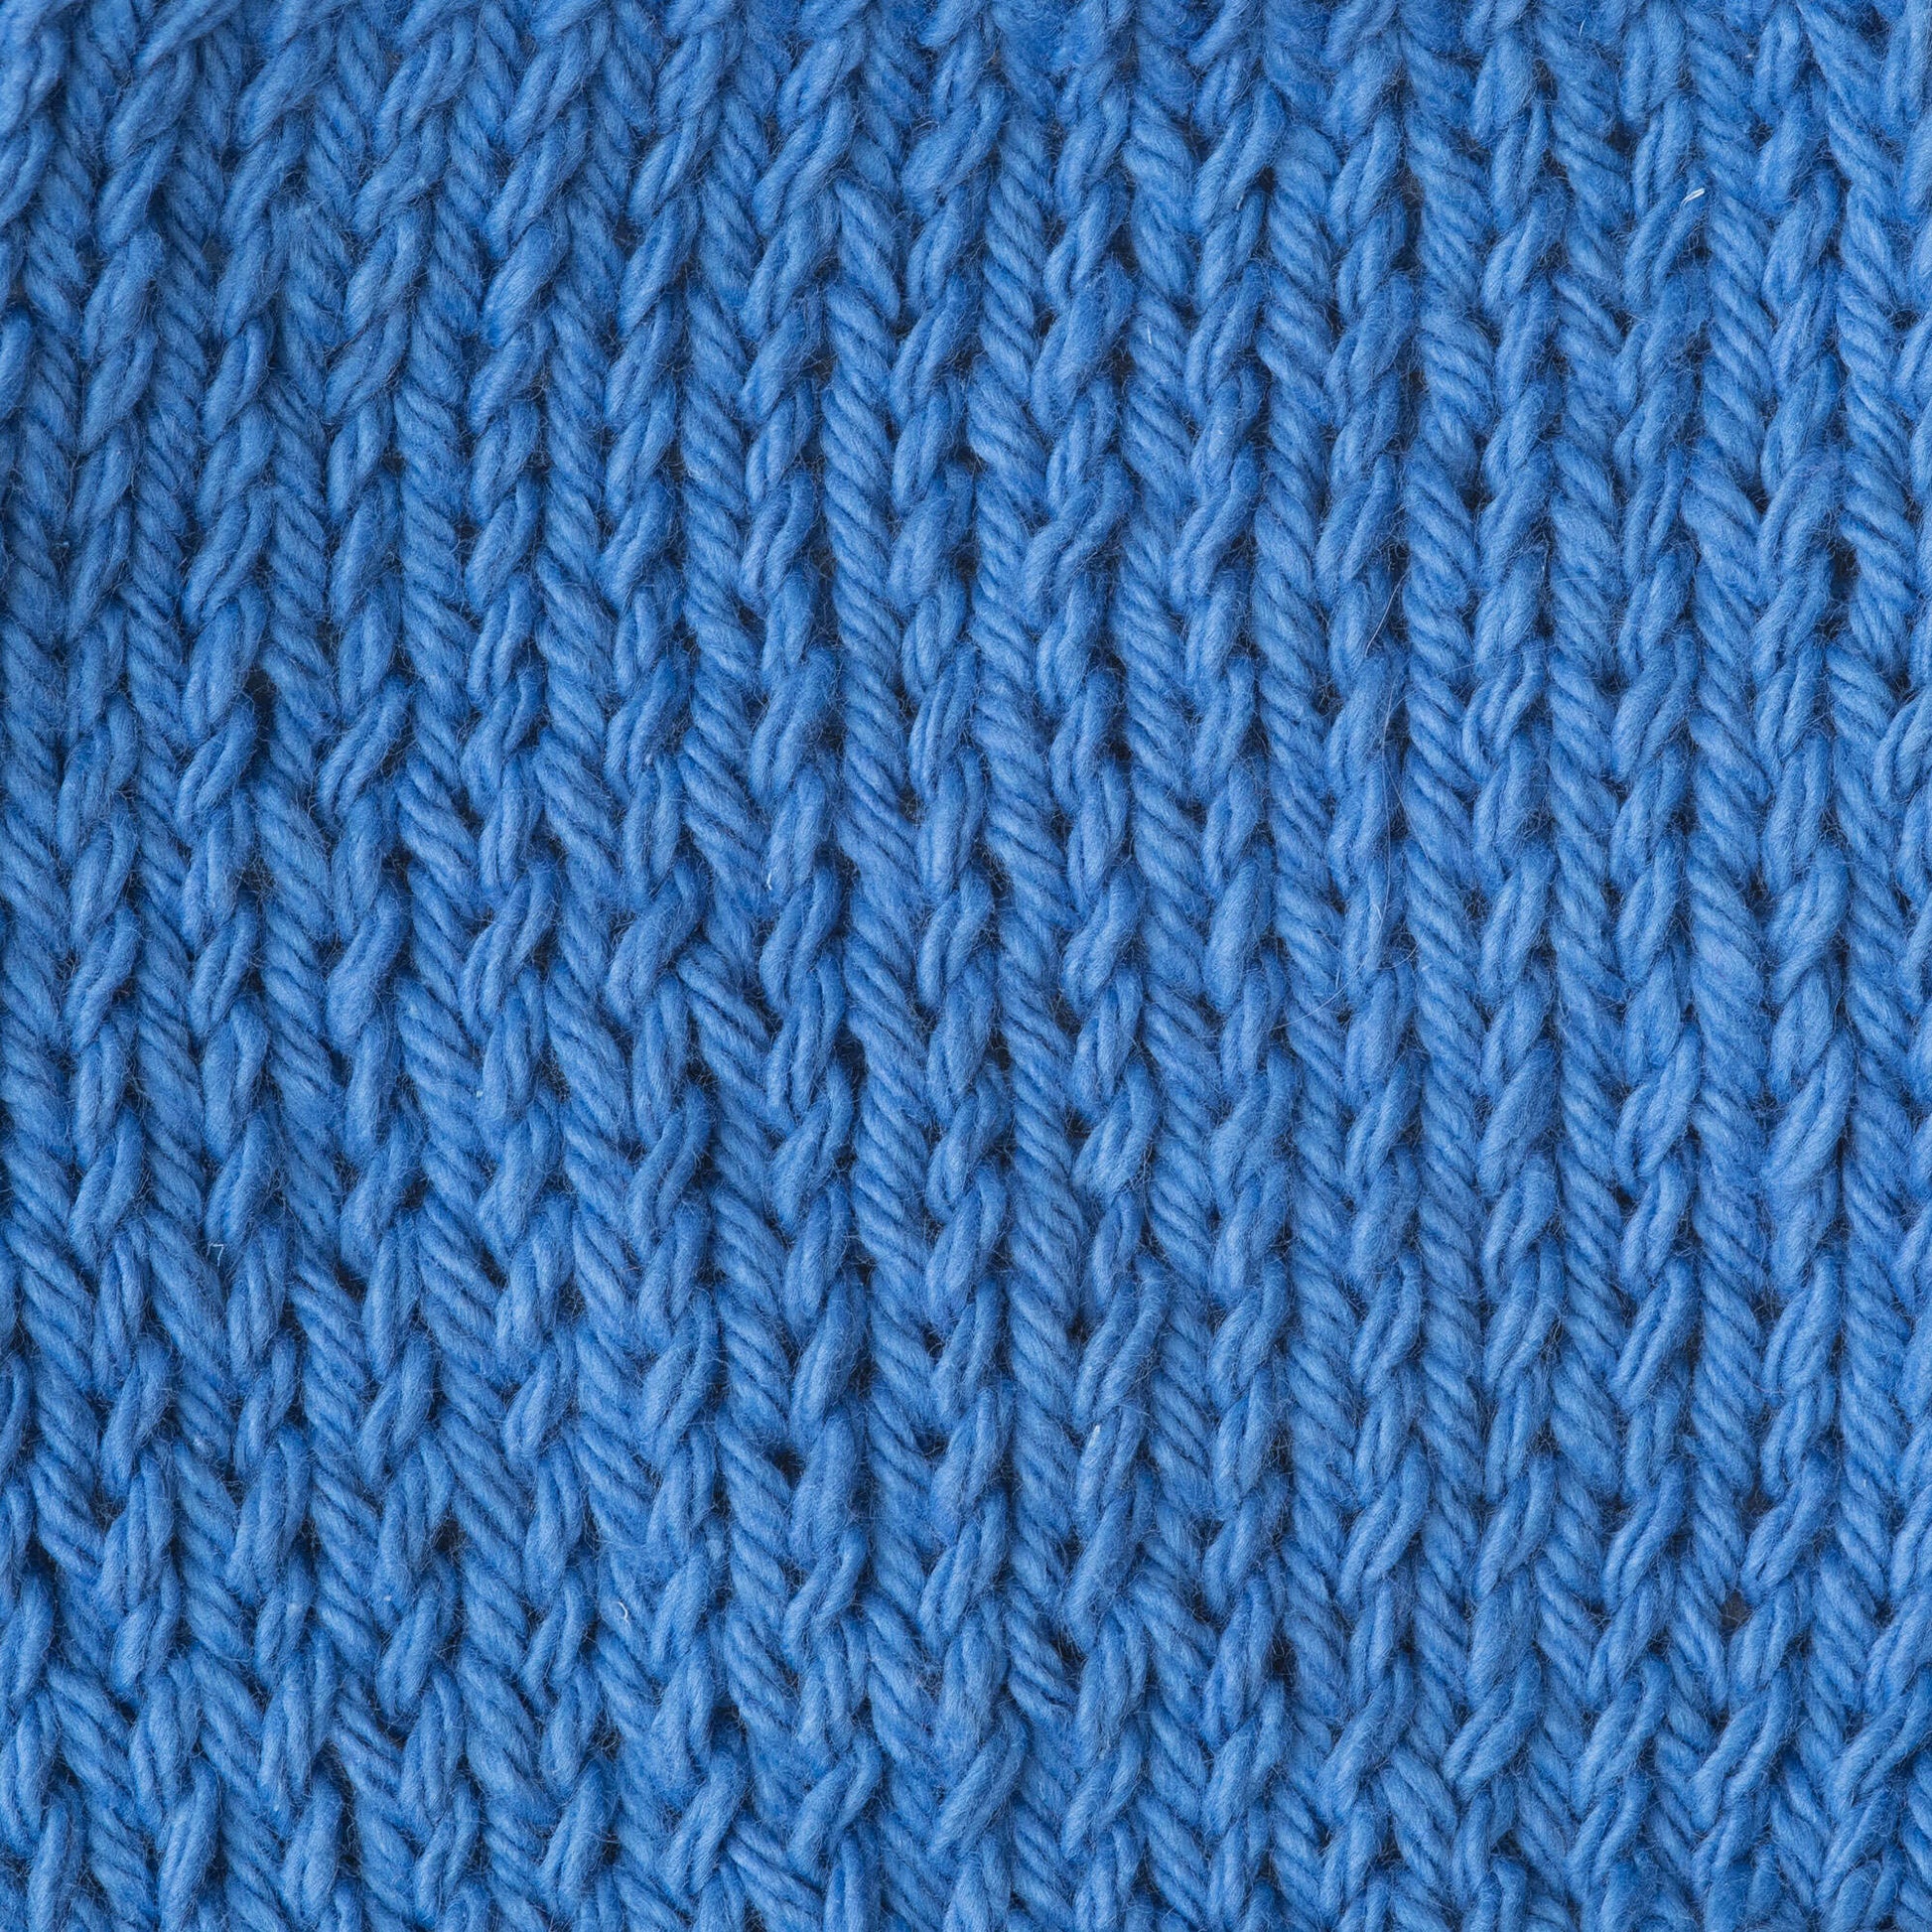 Bernat Handicrafter Cotton Yarn - Solids-Indigo, 1 count - Kroger